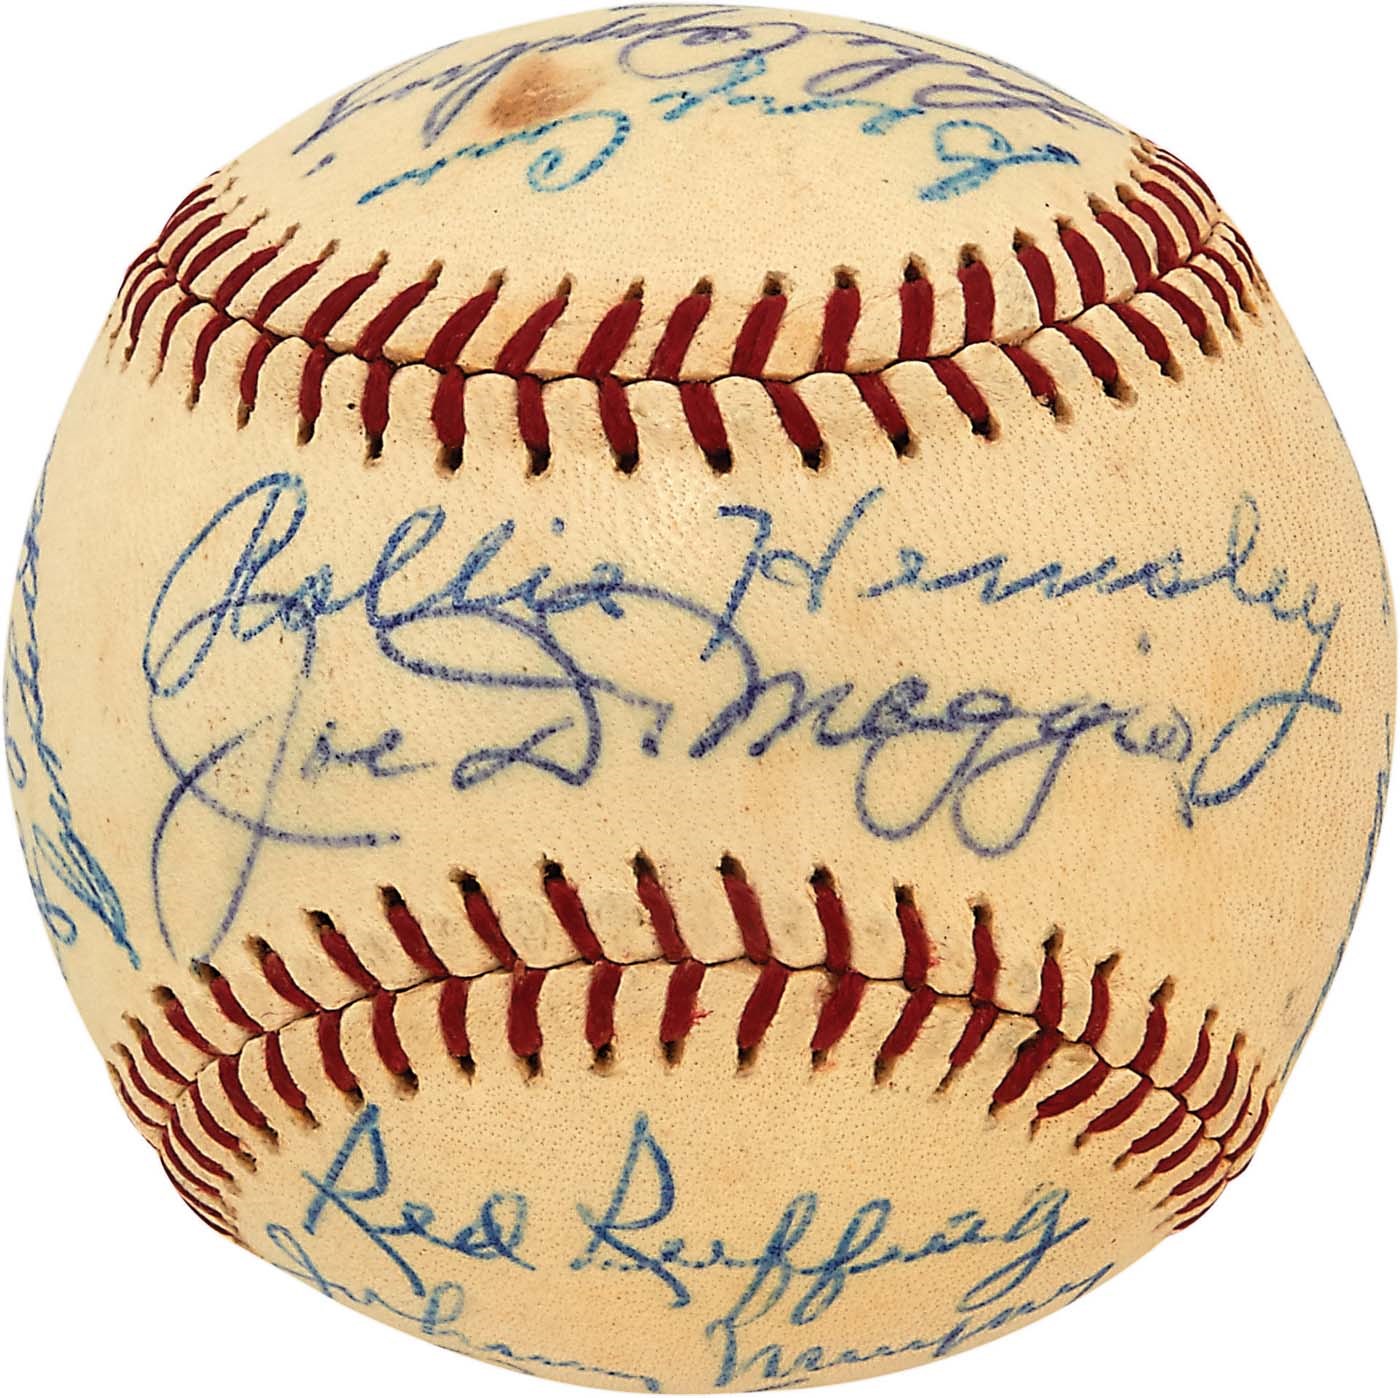 1939 All Stars Reunion Team Signed Baseball w/DiMaggio (JSA)